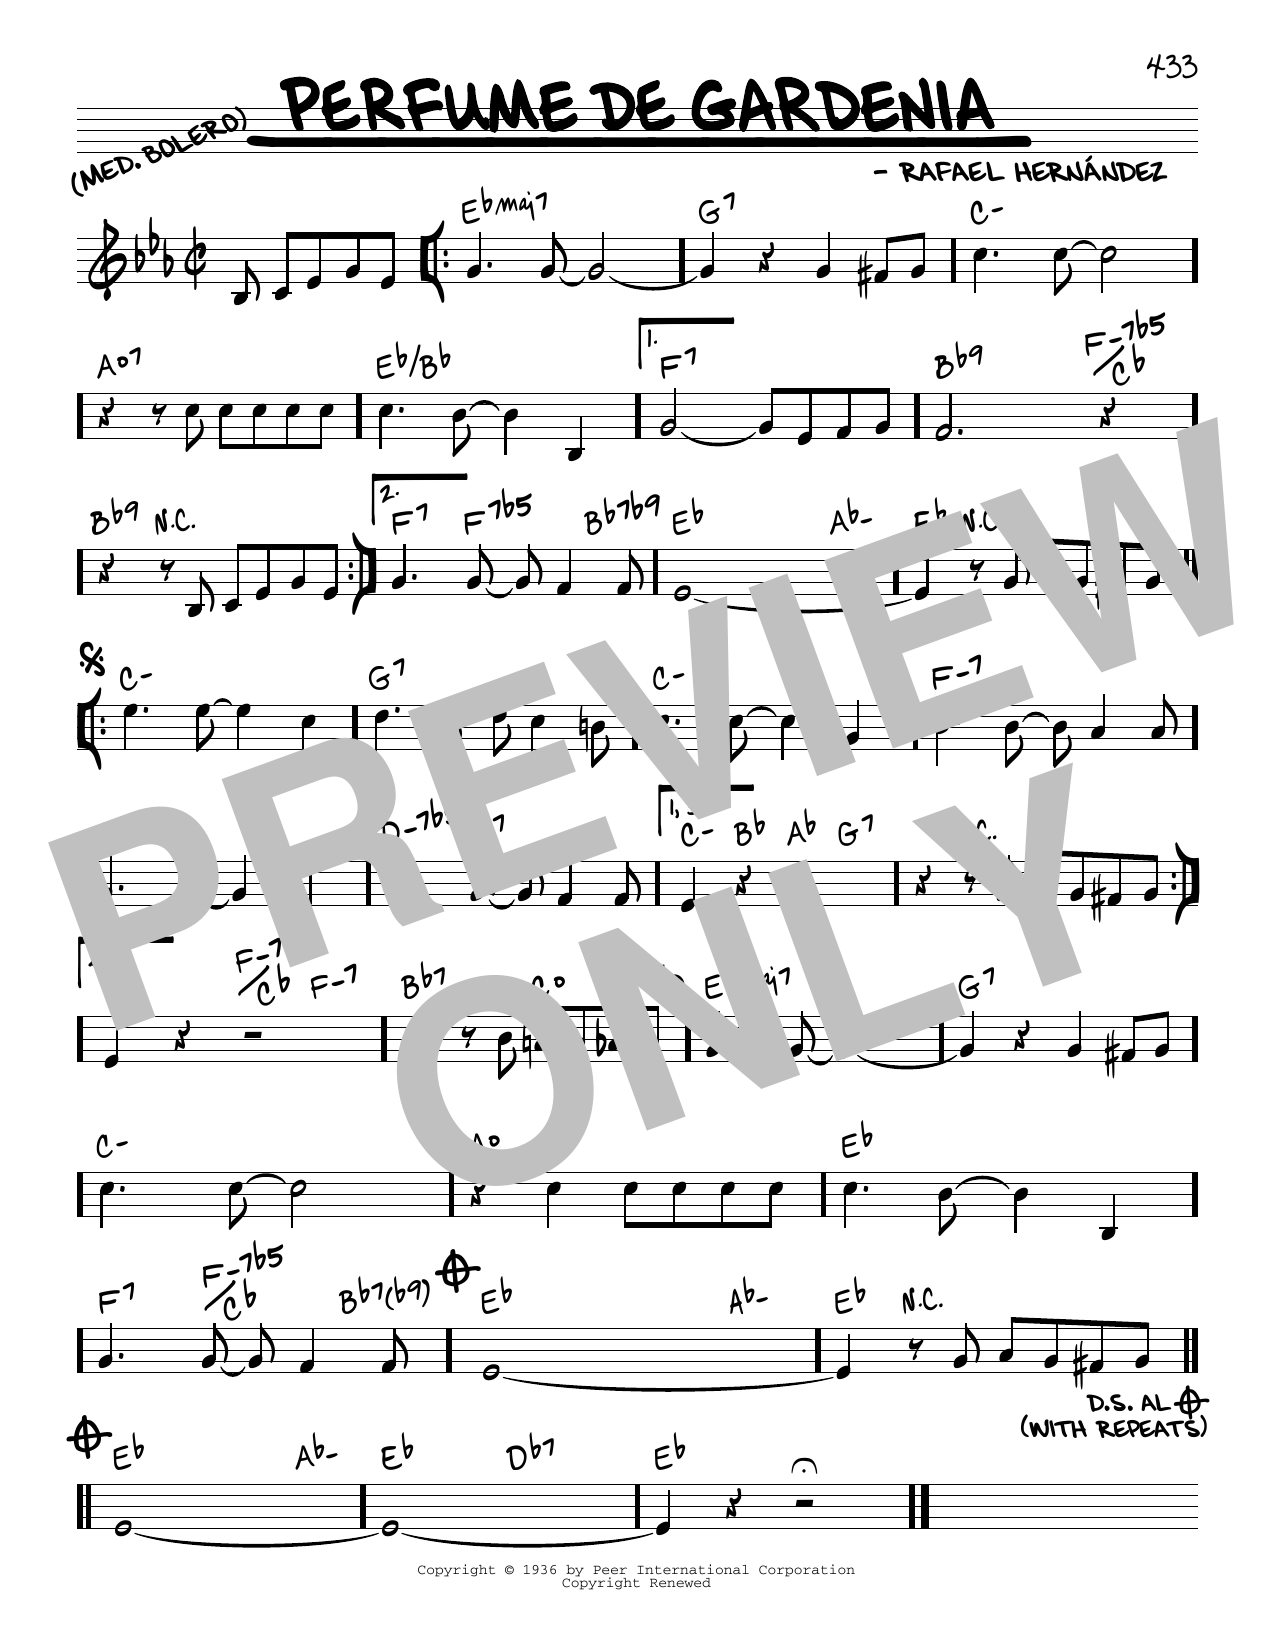 Rafael Hernandez Perfume De Gardenia Sheet Music Notes & Chords for Real Book – Melody & Chords - Download or Print PDF